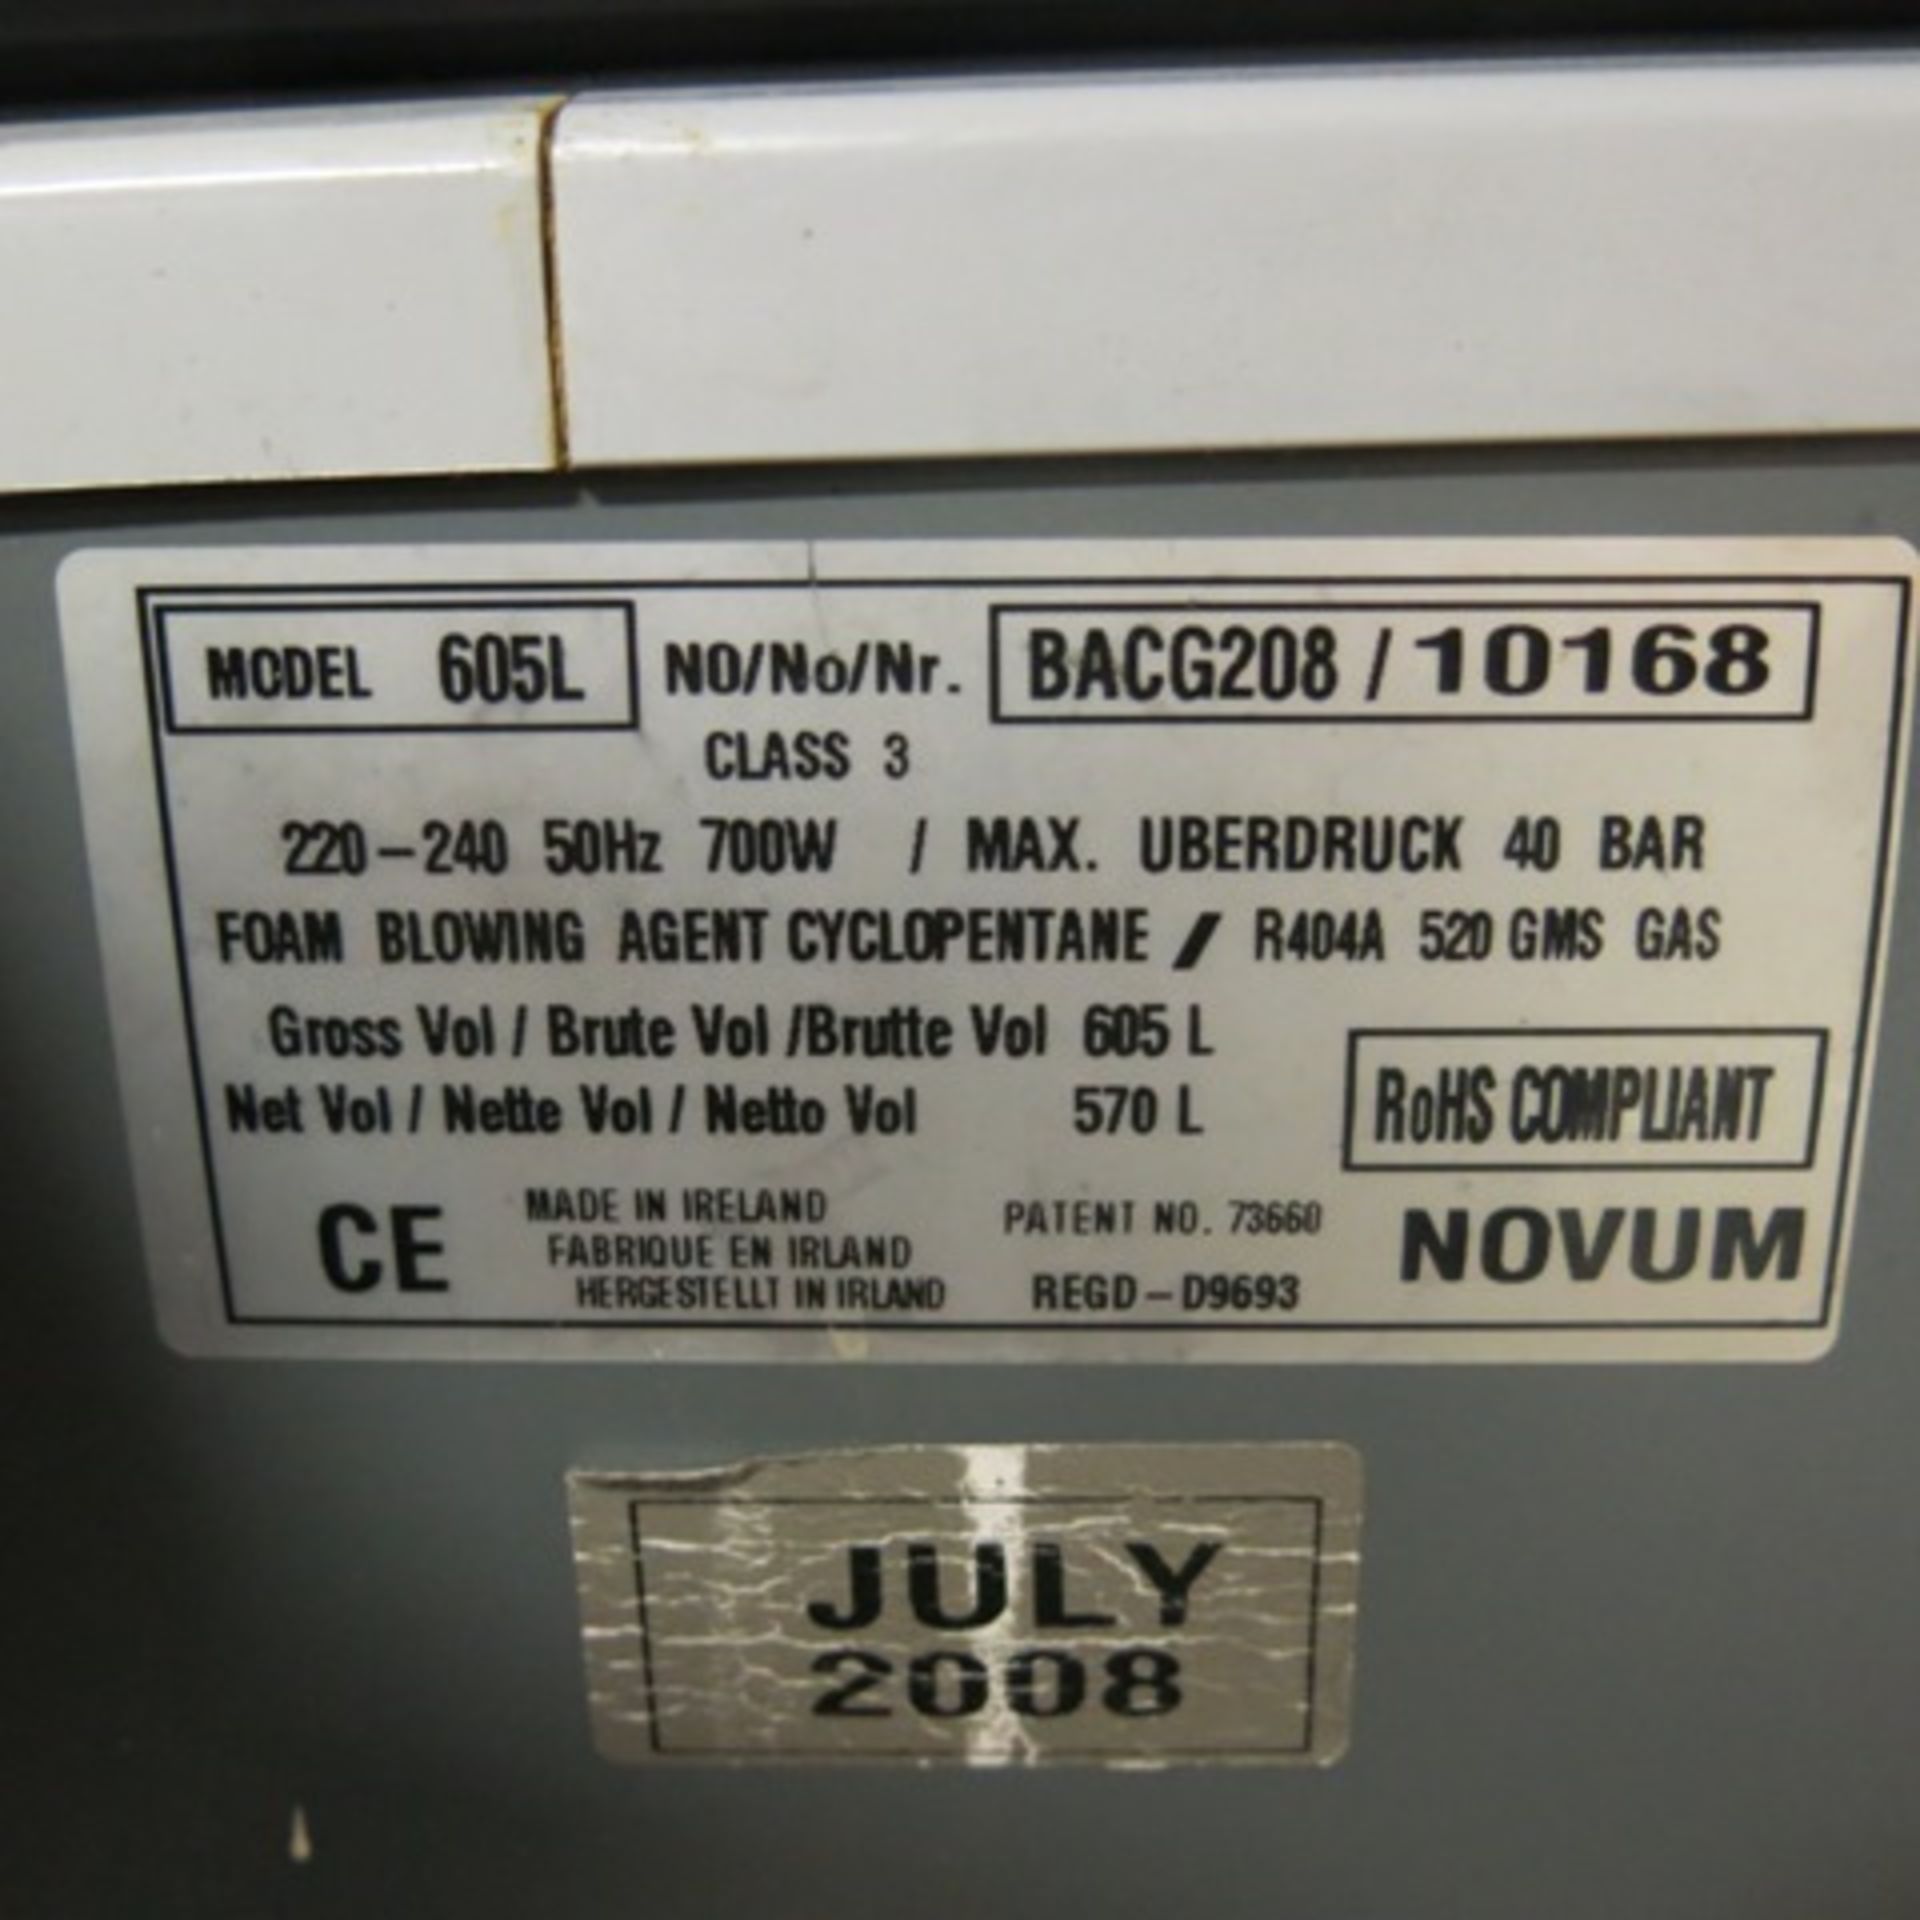 Novum Curved Top Display Chest Freezer. Model 605L, S/N BACG208/10168. Size (H)93cm x (W)170cm x ( - Image 5 of 5